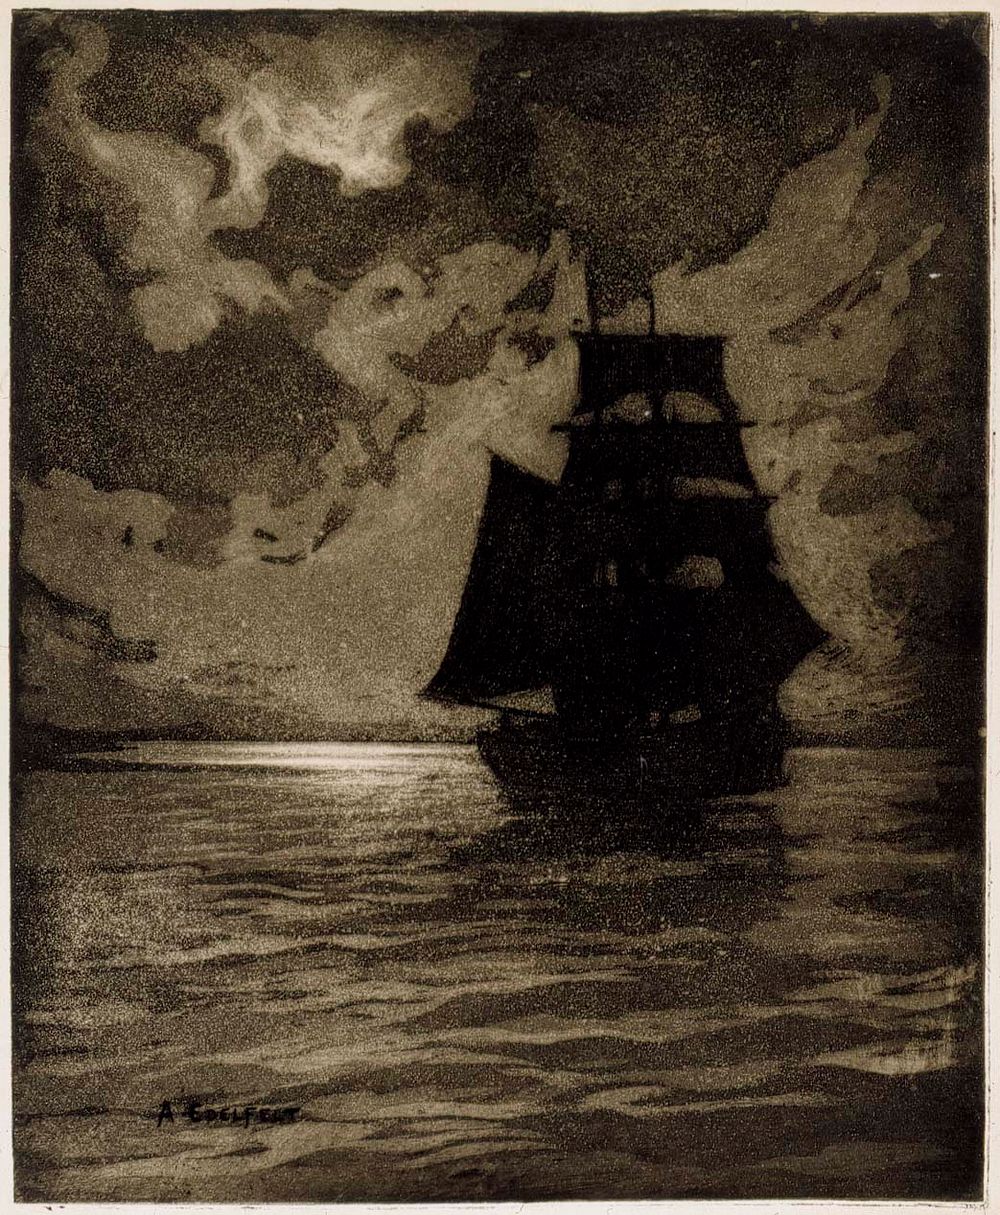 Ship in the moonlight, 1900 - 1905, by Albert Edelfelt